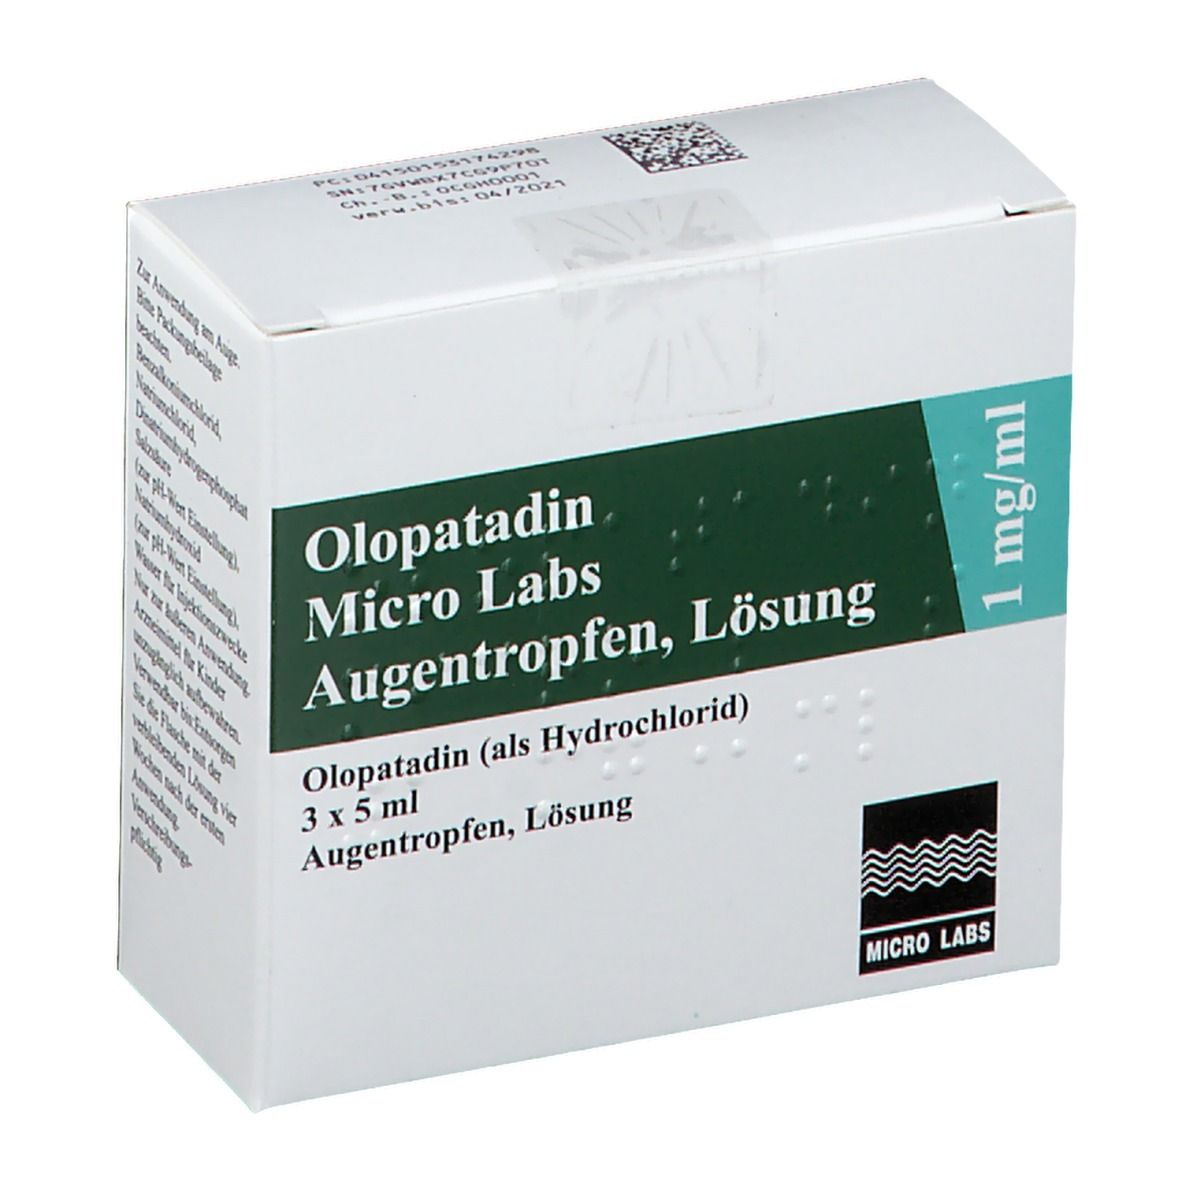 Olopatadin Micro Labs 1 mg/ml 3x5 ml - shop-apotheke.com